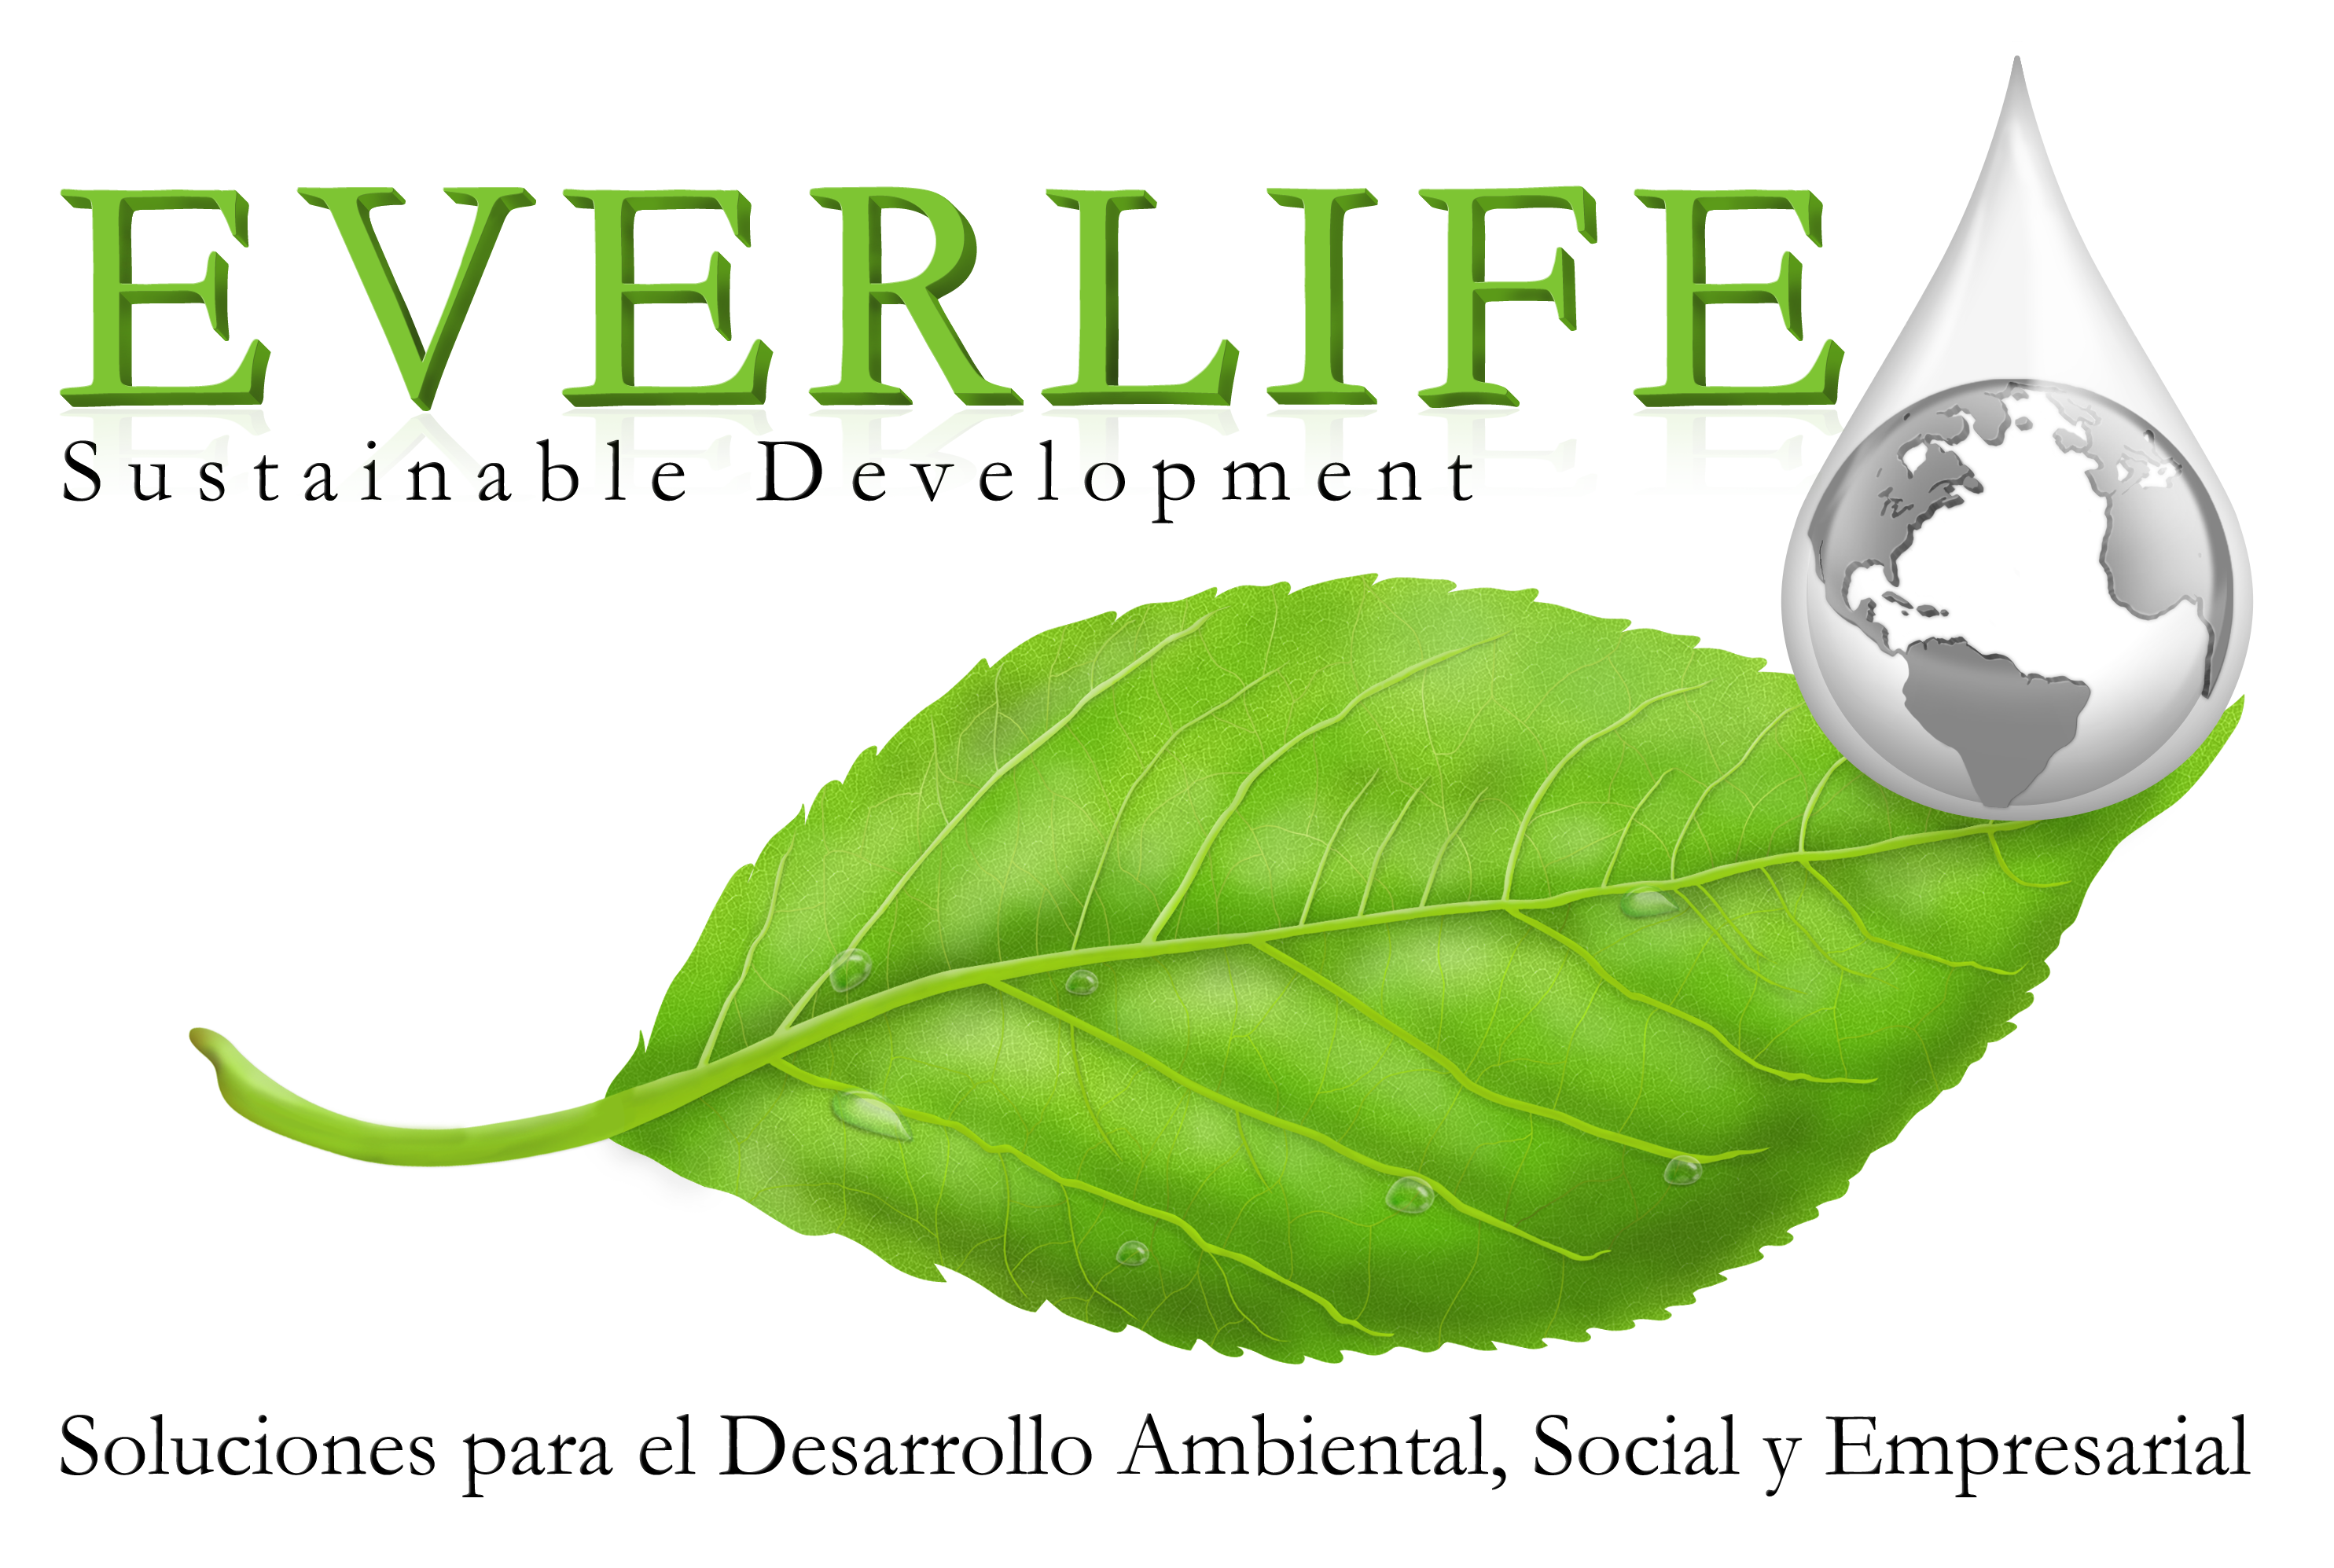 Logo Everlife